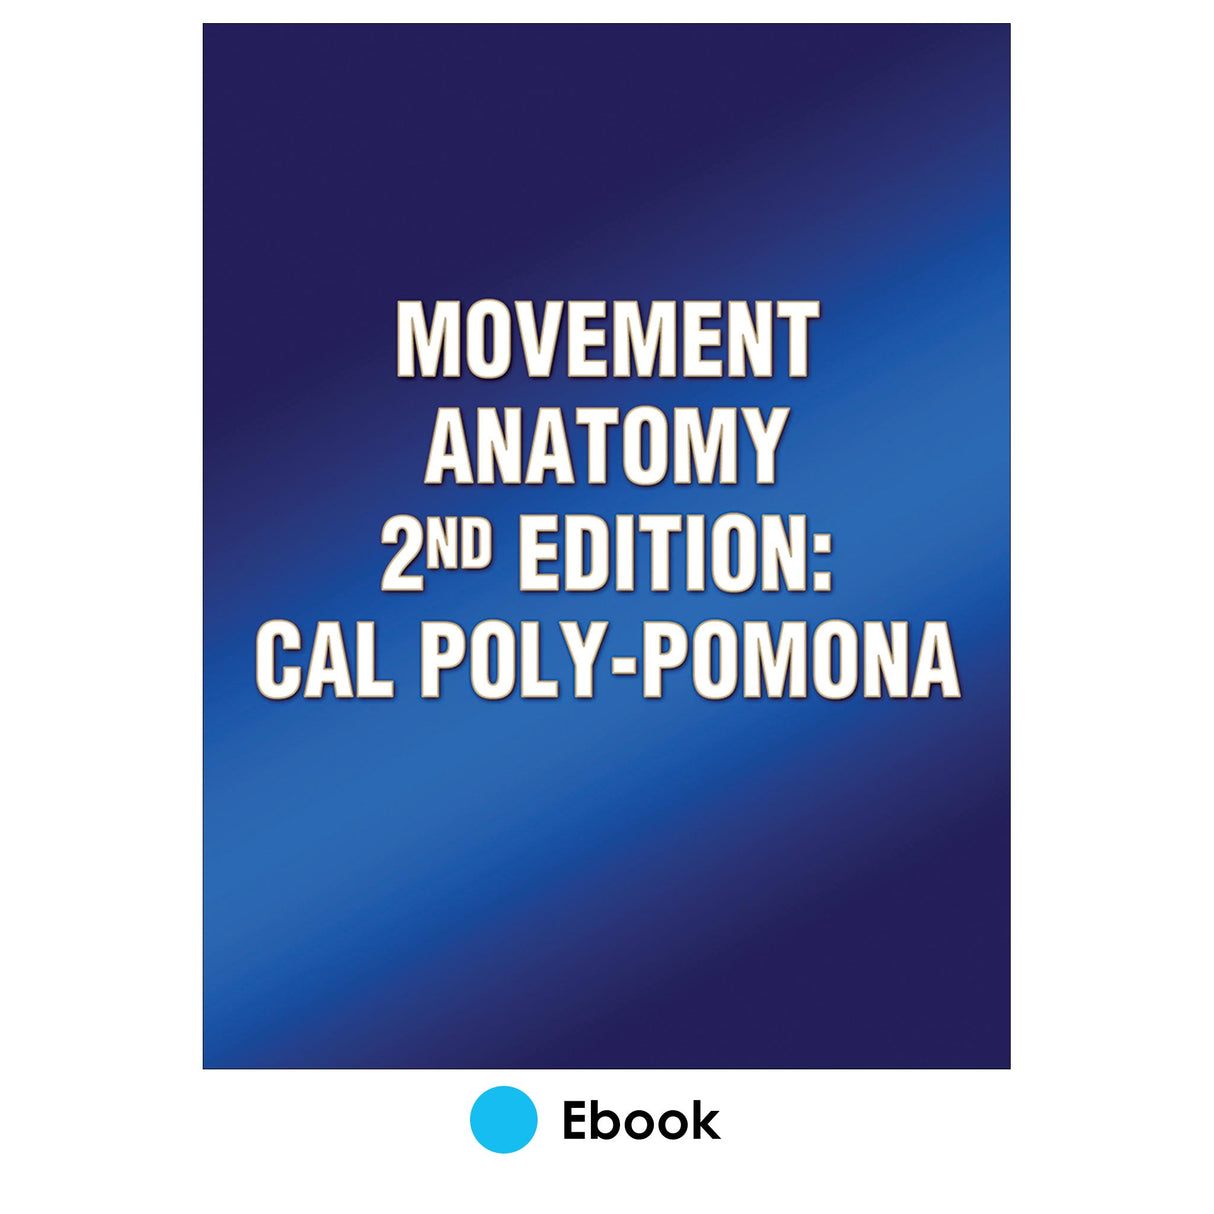 Movement Anatomy 2nd Edition: Cal Poly-Pomona